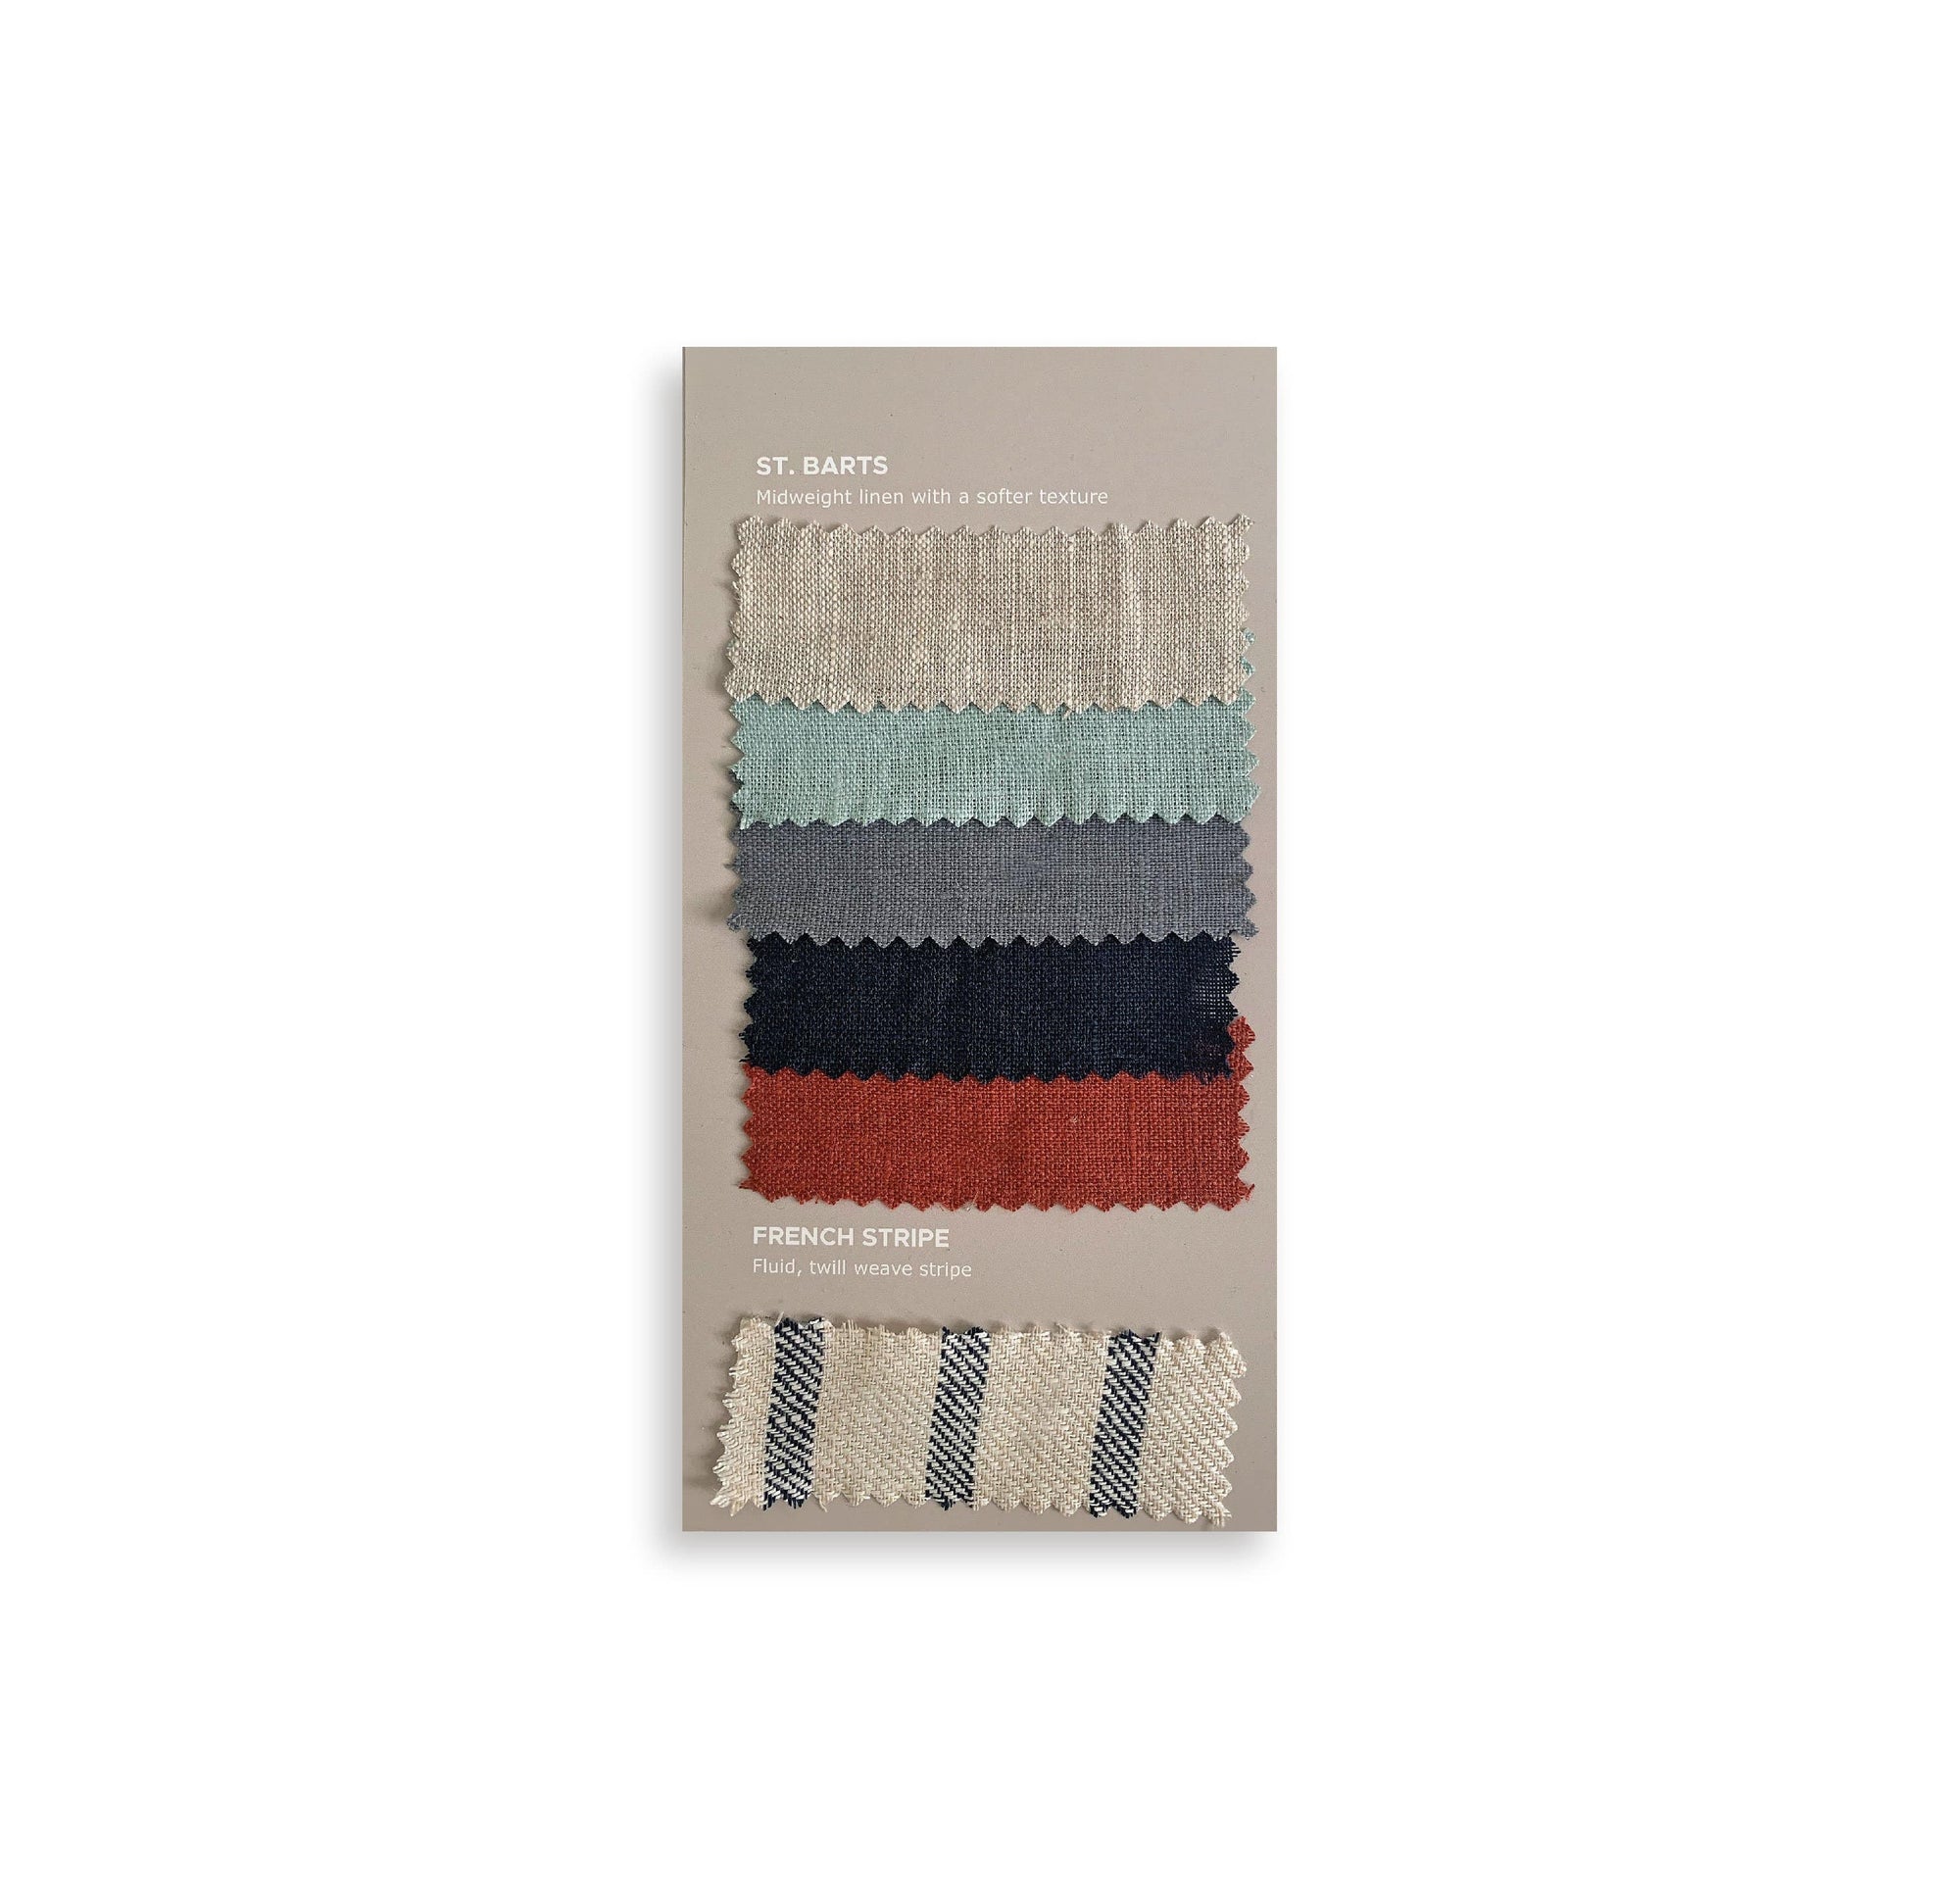 Orkney Linen Napkin Set (Choose 4 or 6) - Rough Linen